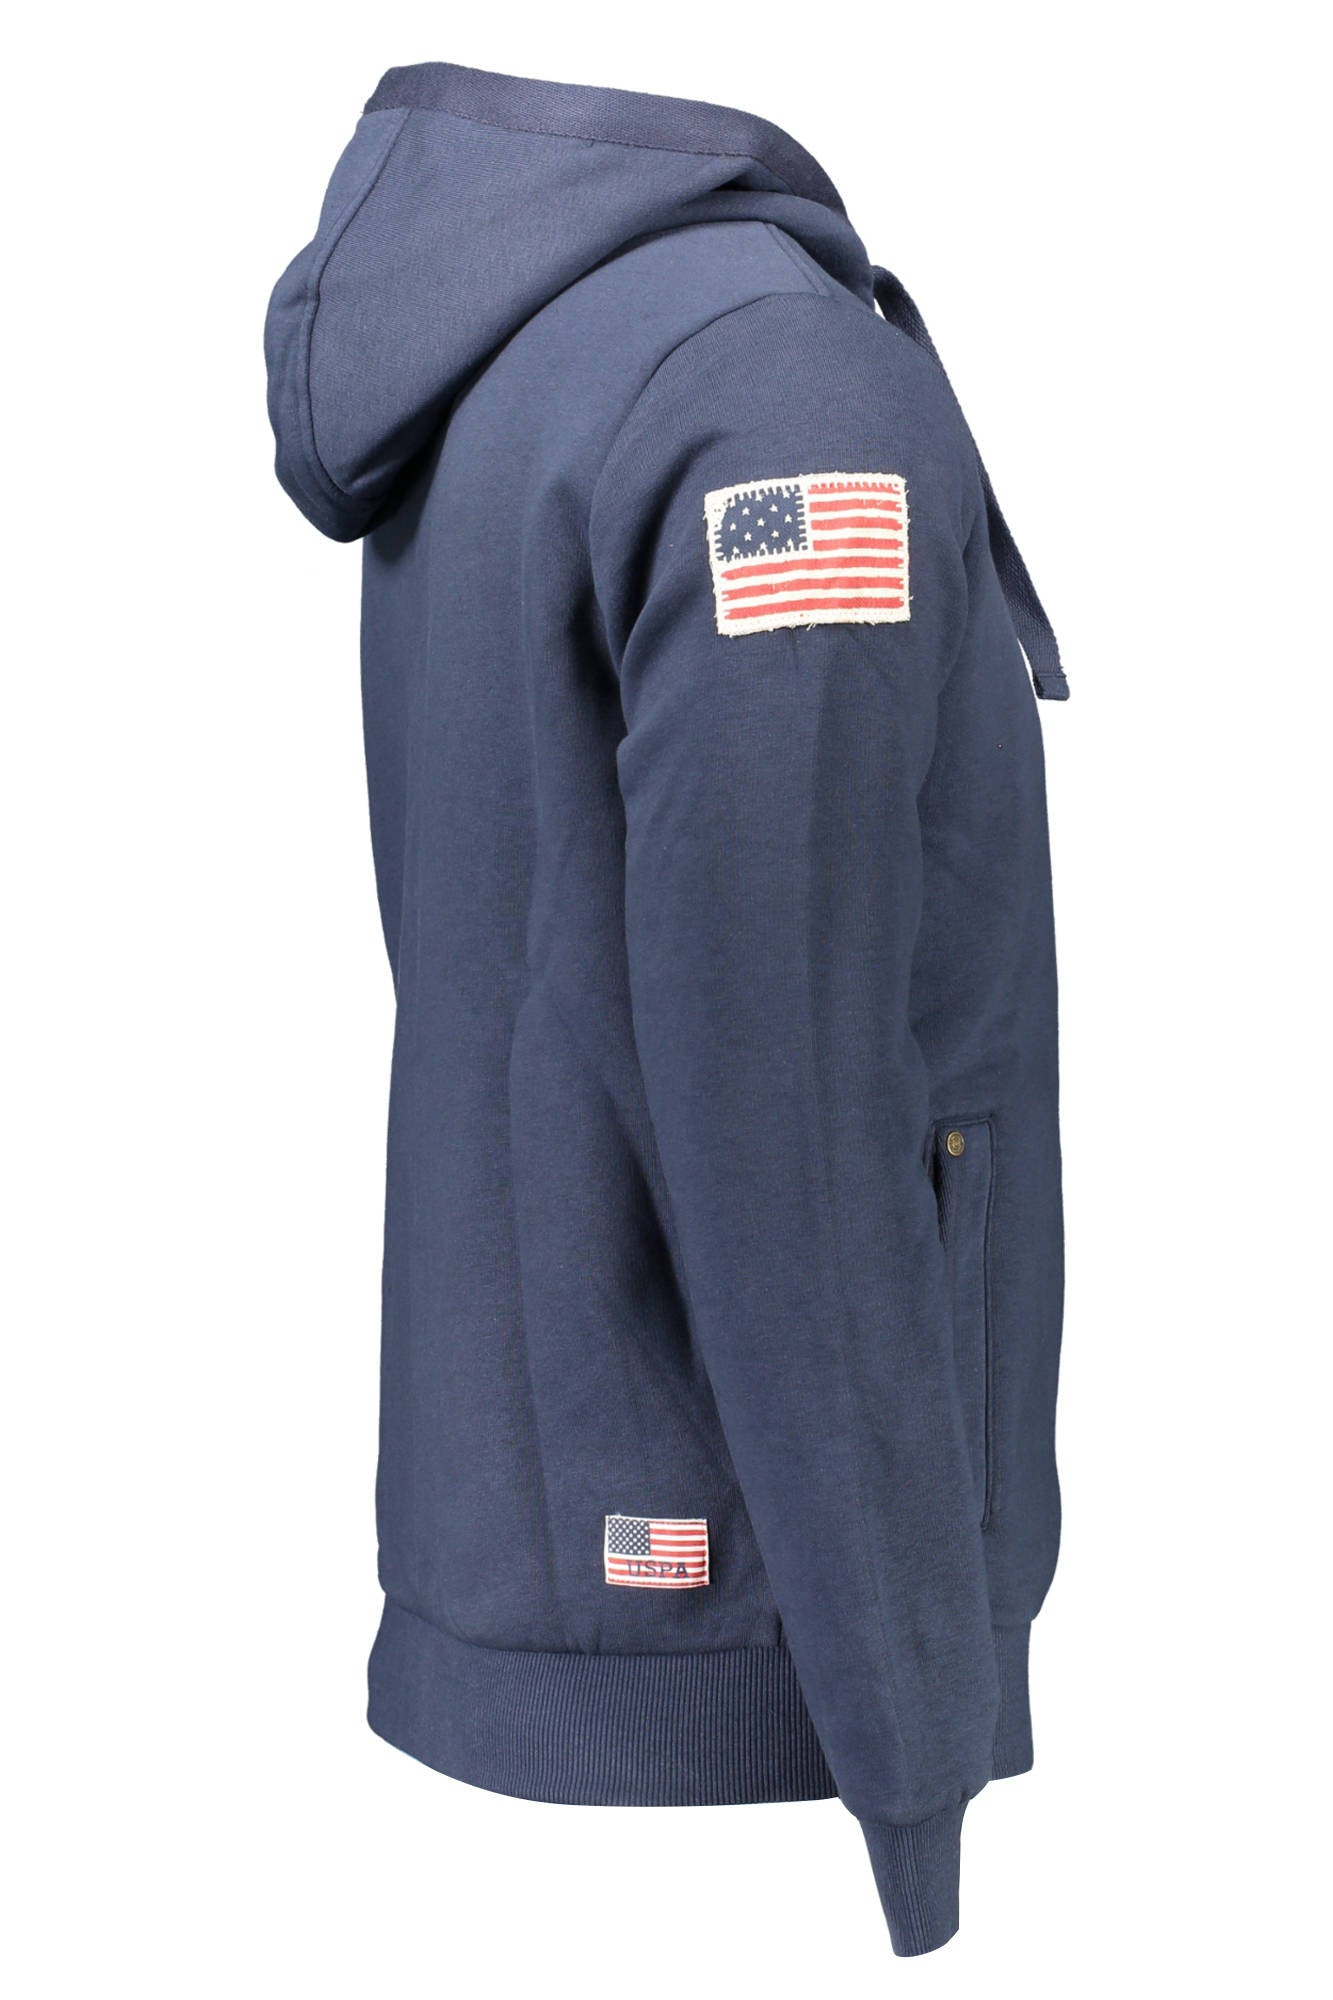 U.S. POLO ASSN. Blue Sweater - Fizigo